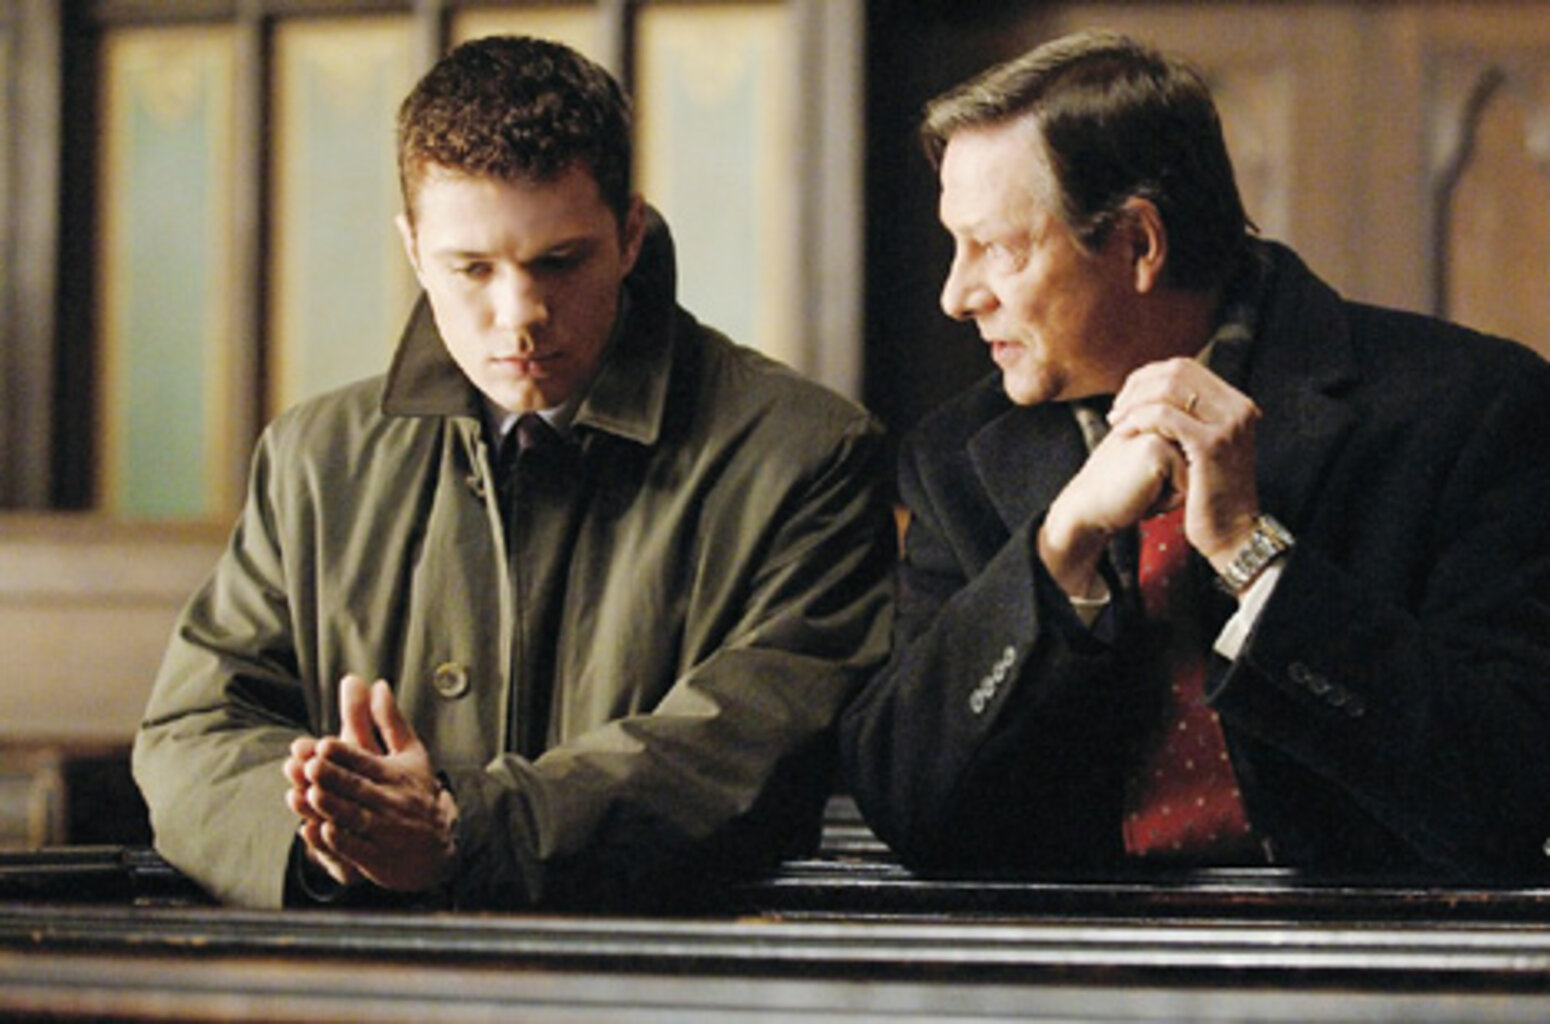 Разговор 2 мужчин. Измена/Breach (2007). Беседа двух мужчин. Двое мужчин беседа.